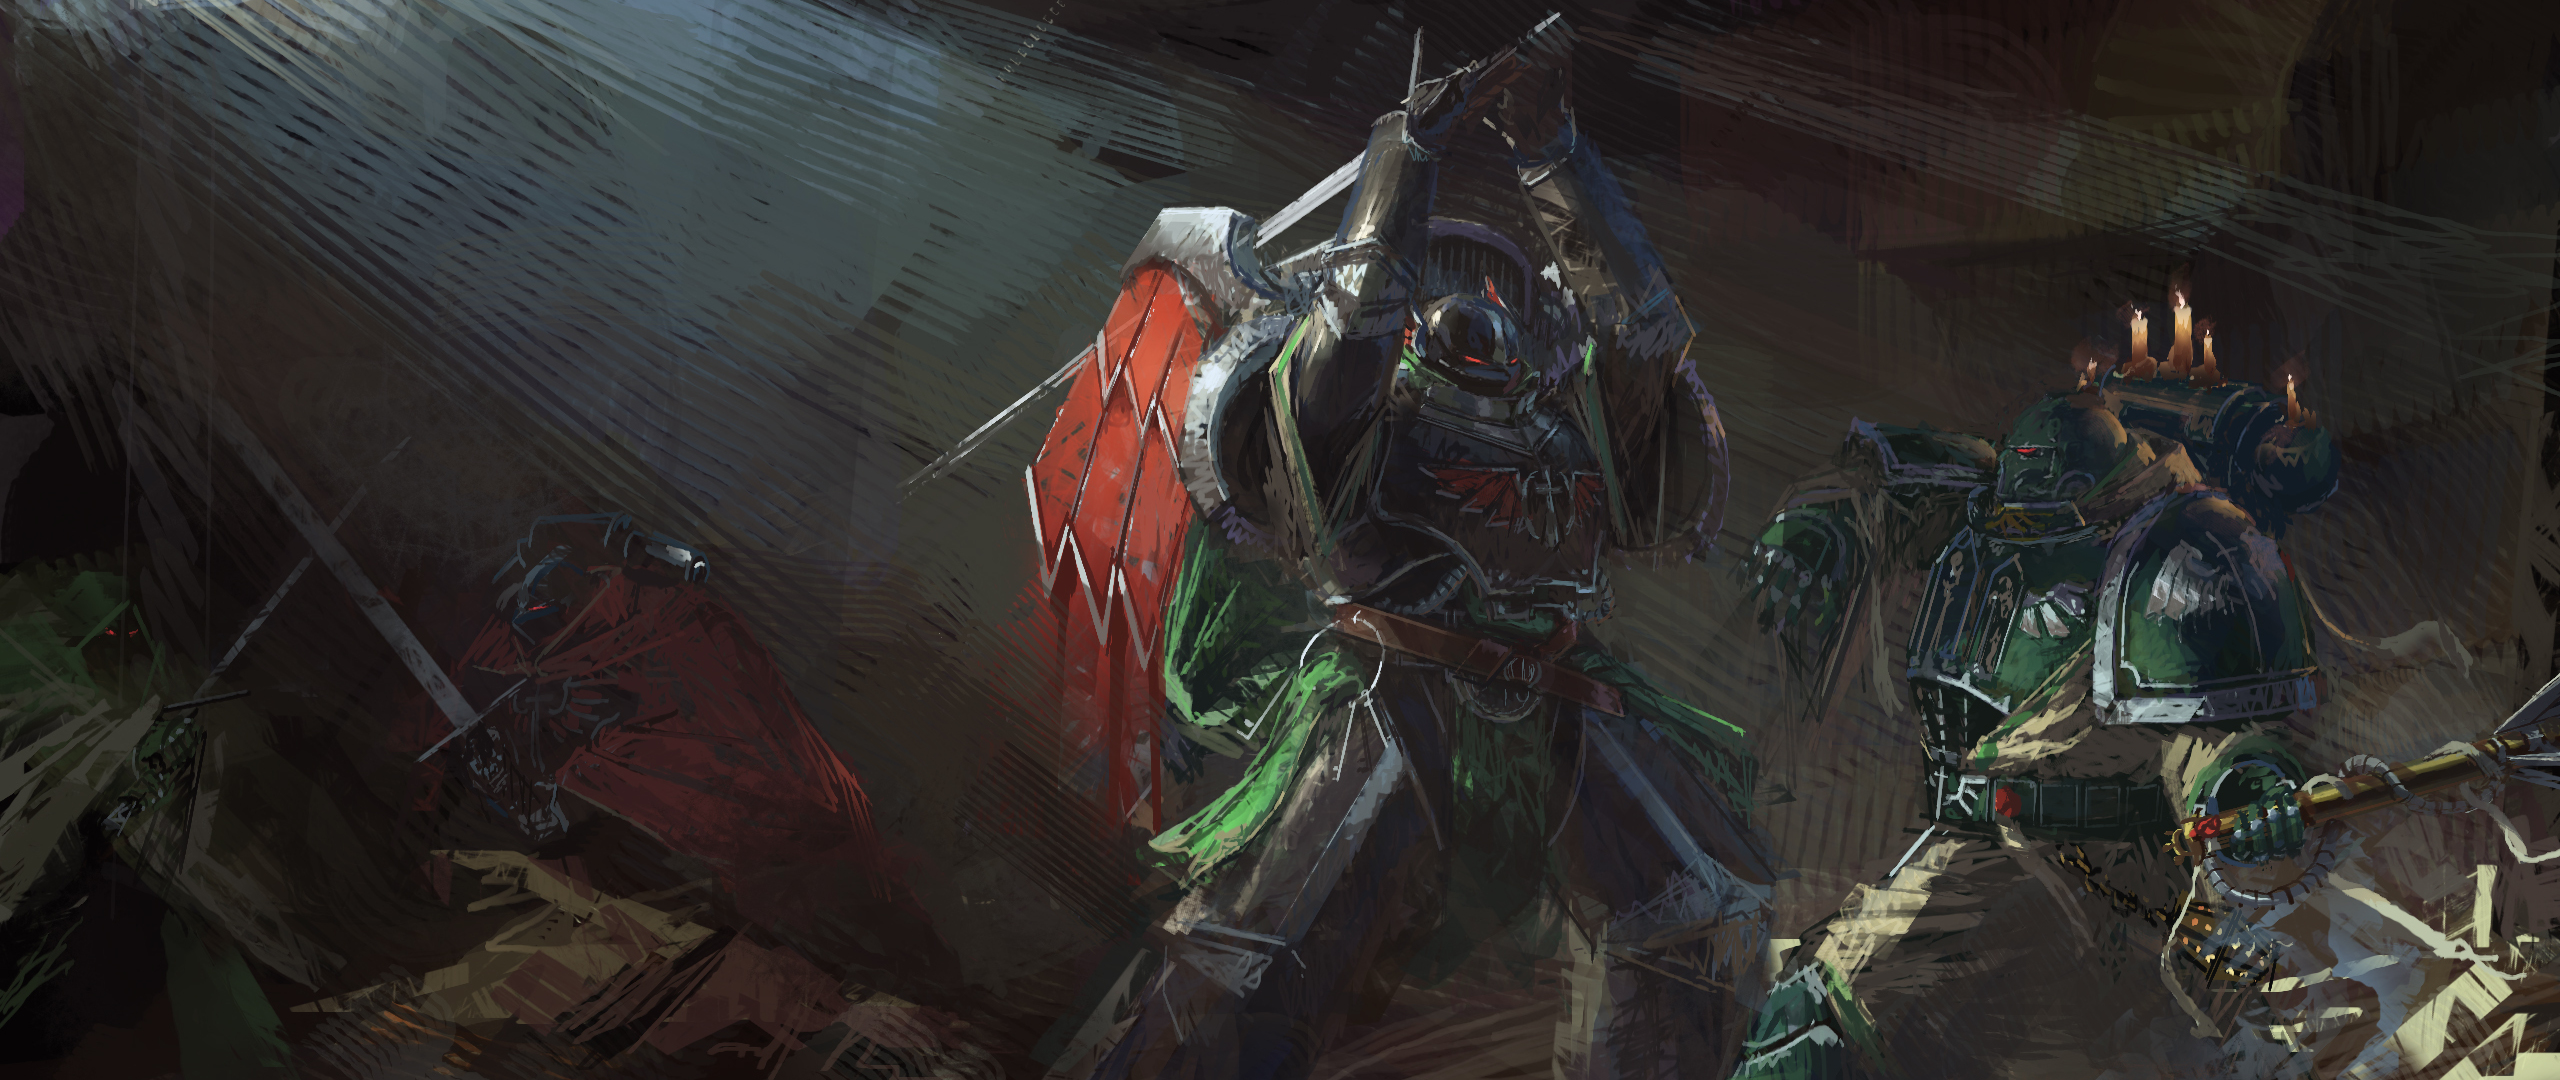 Warhammer 40K Desktop Backgrounds / Warhammer Tactical Strategy Fantasy